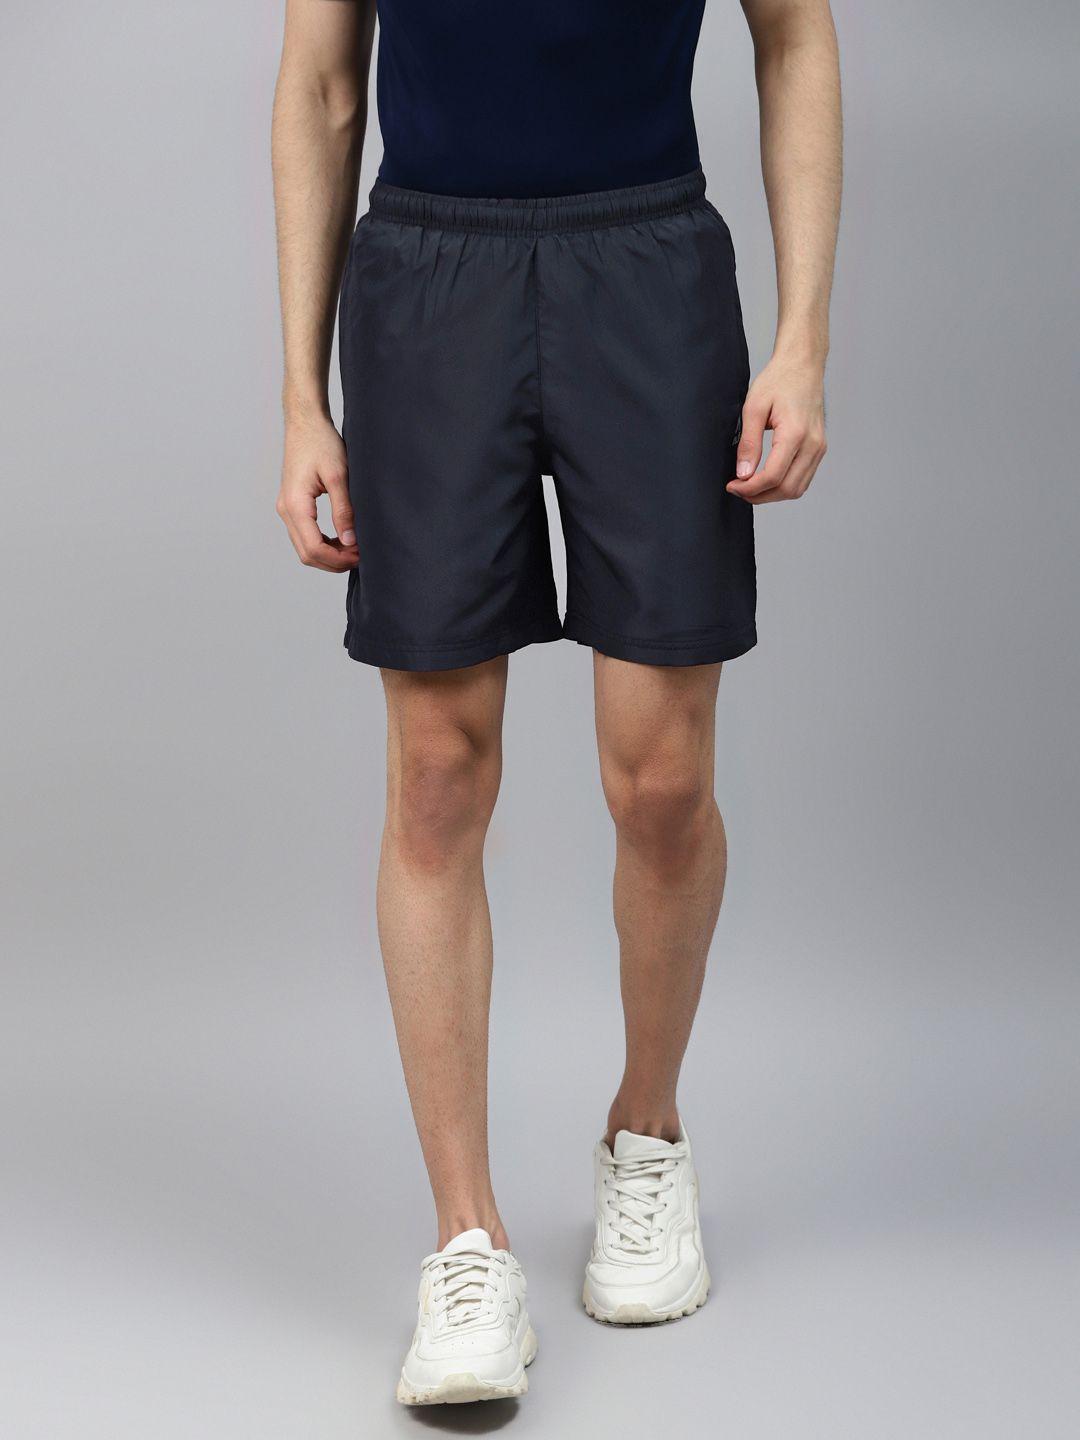 alcis-men-navy-blue-solid-slim-fit-sports-shorts